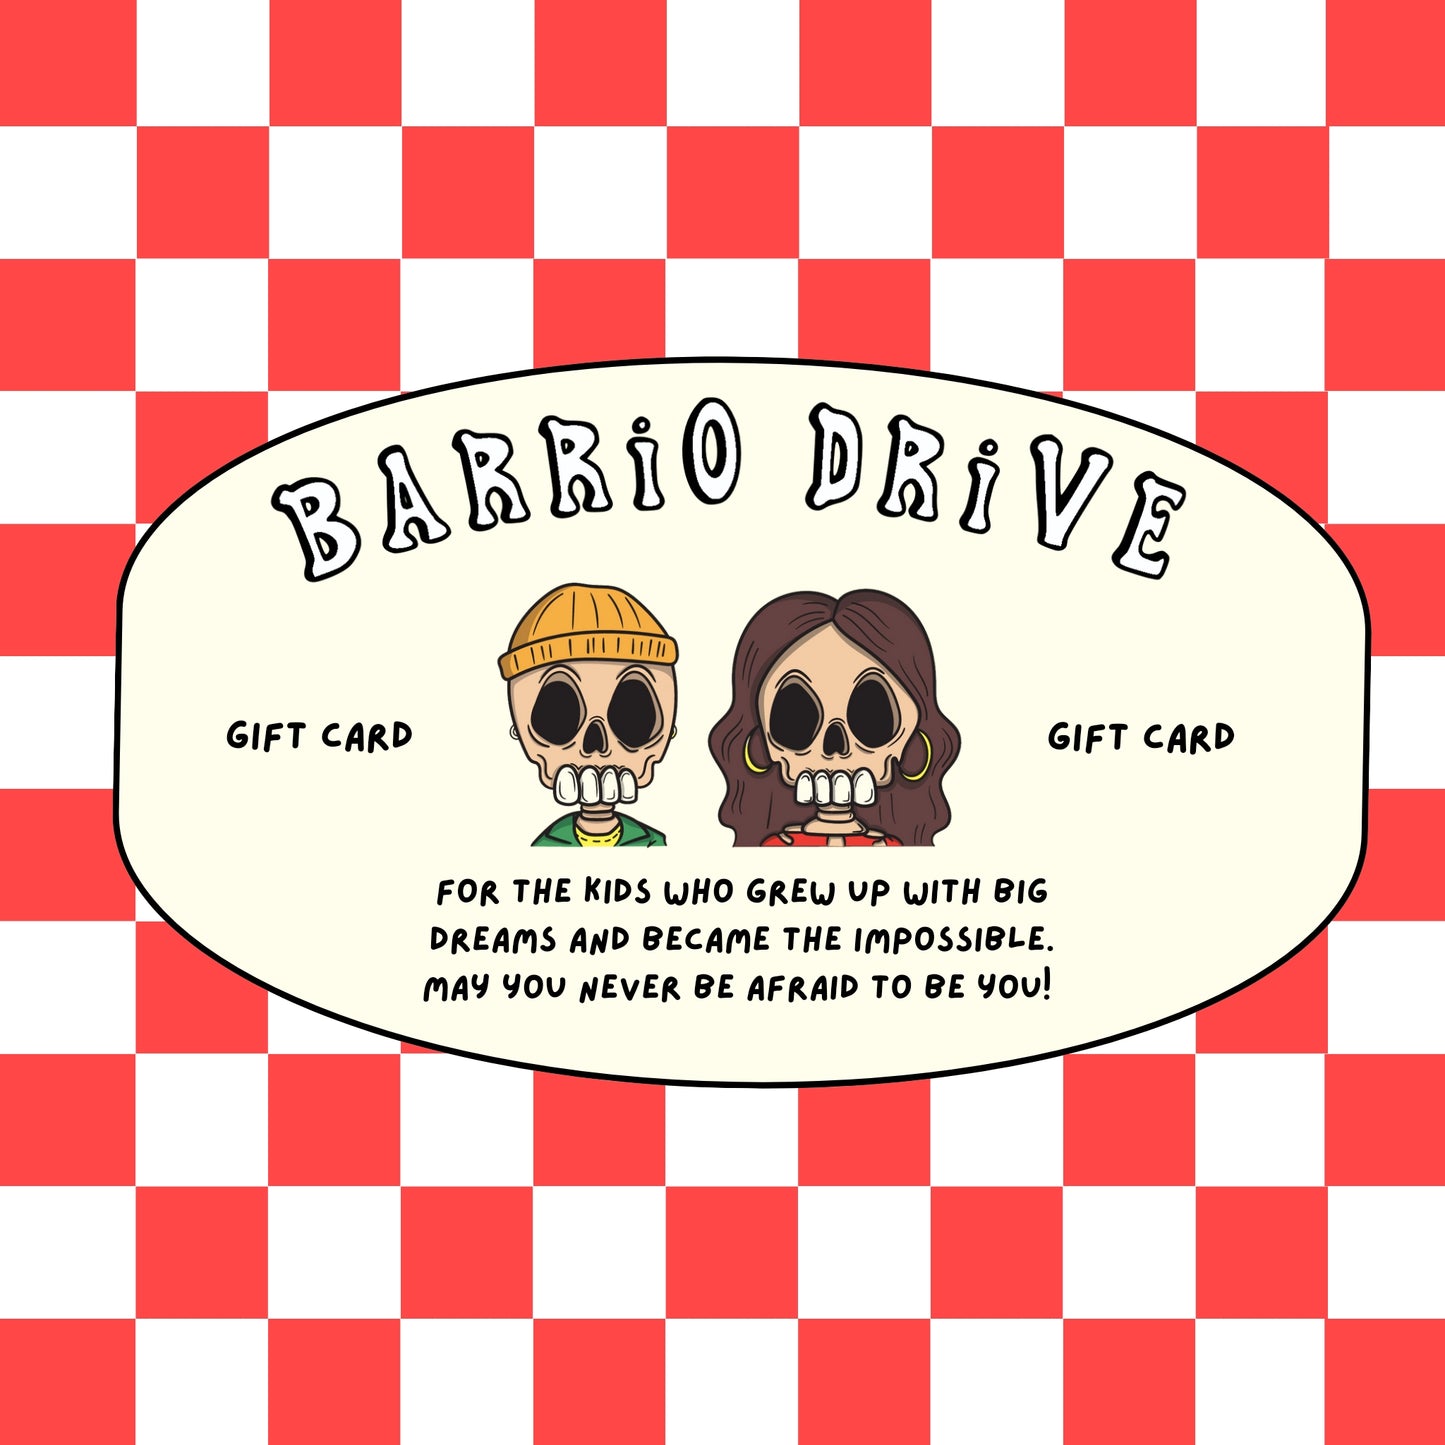 Barrio Drive Gift Card